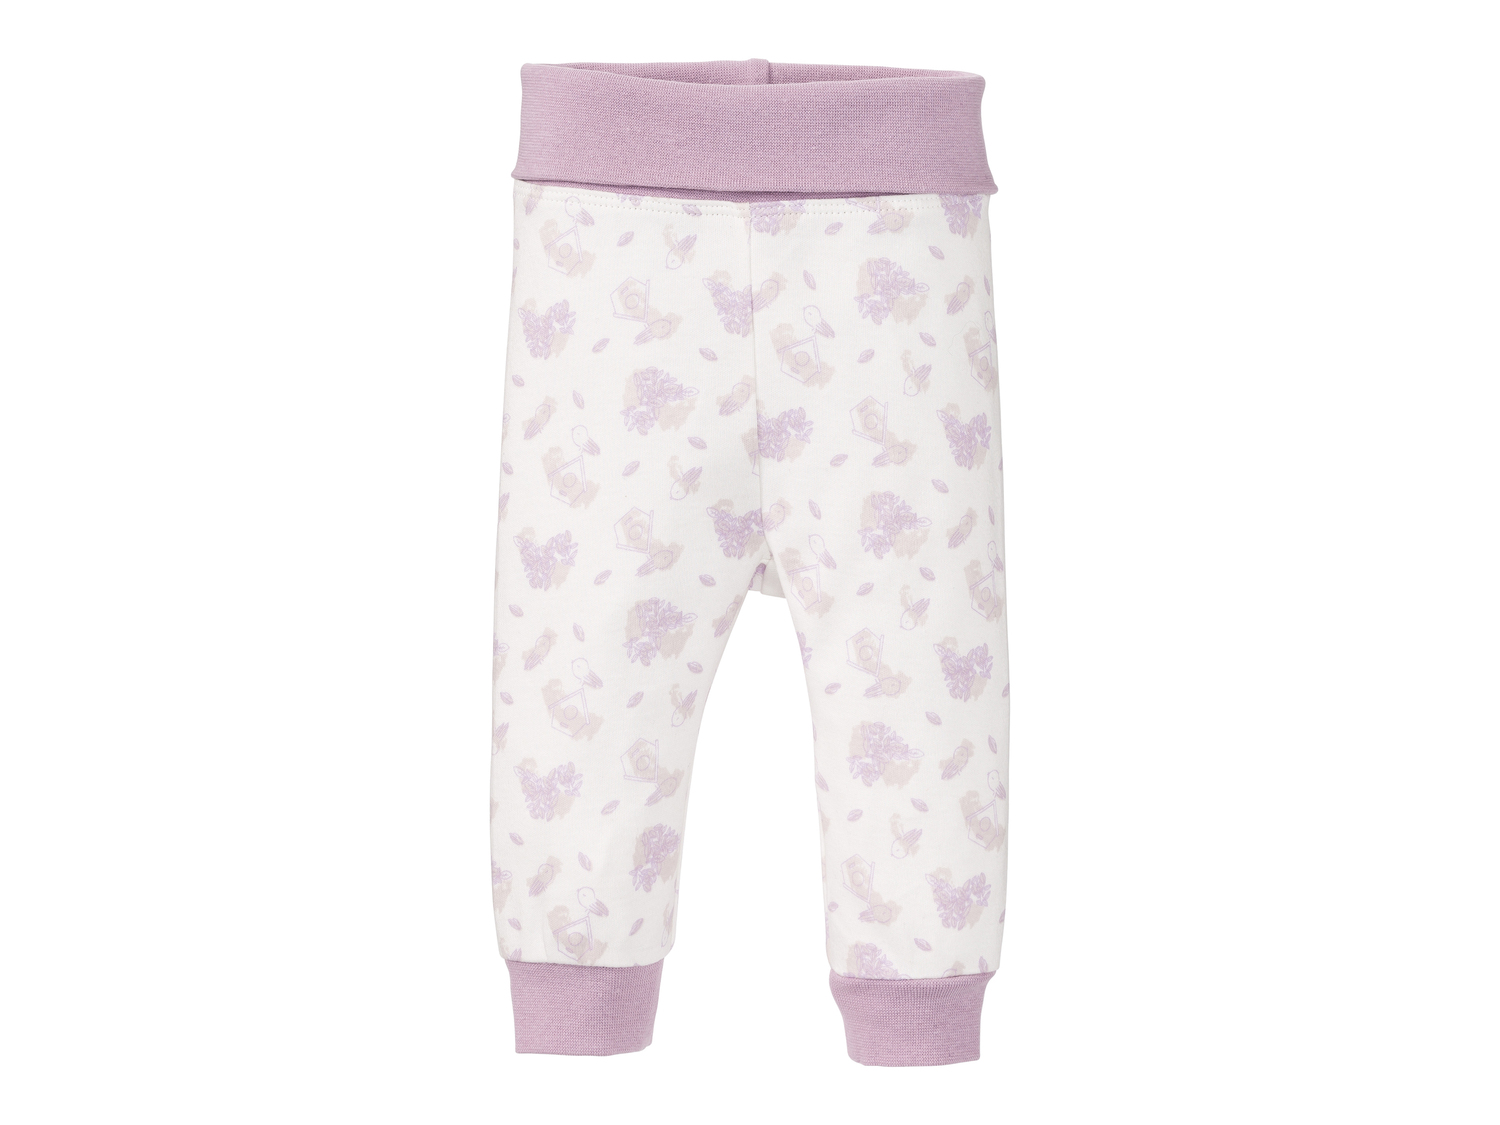 Pantaloni sportivi per neonati Lupilu, prezzo 3.99 &#8364; 
2 pezzi - Misure: ...